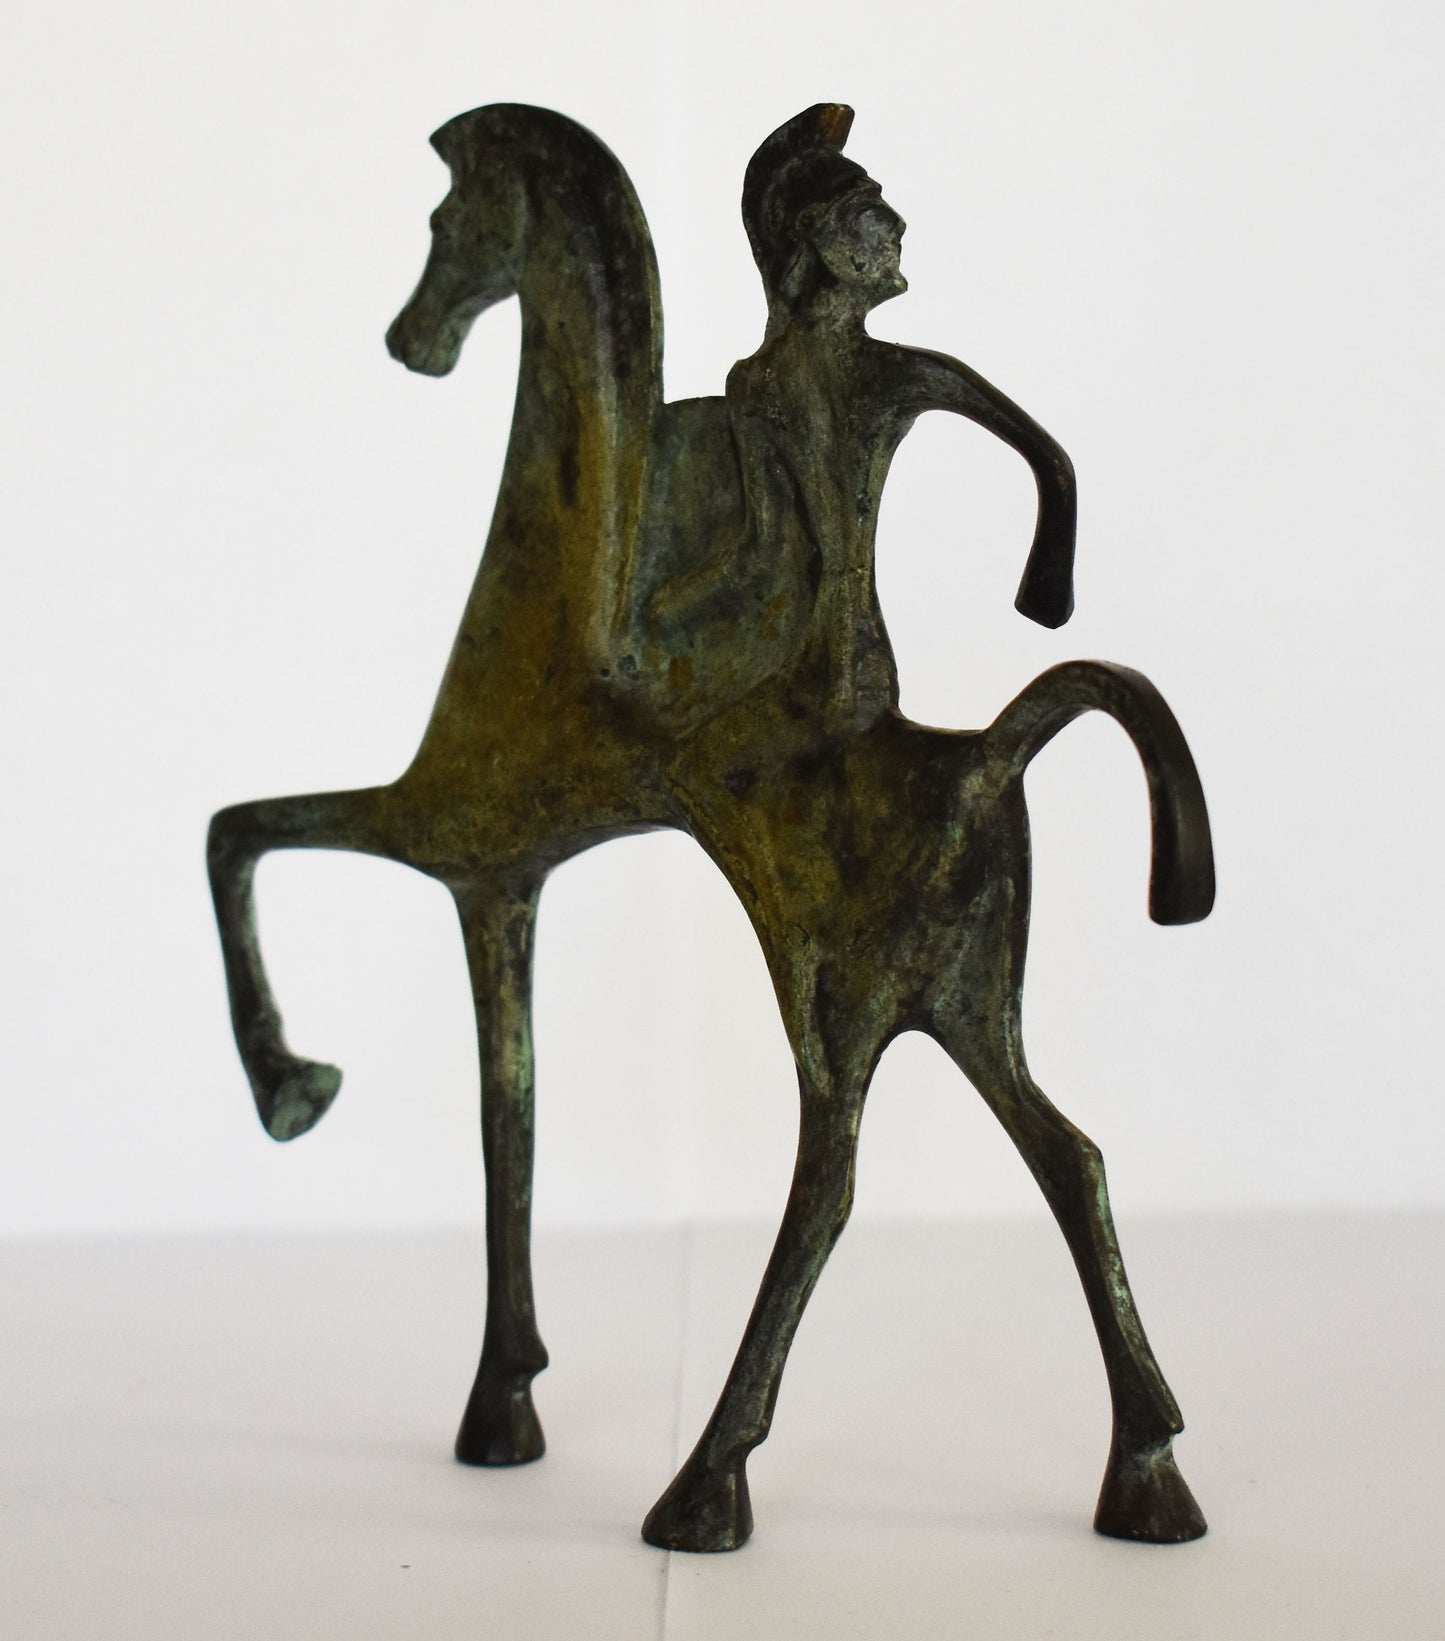 Ancient Greek Warrior on Horse - Battle of Marathon - Greco-Persian War - 490 BC - Pure Bronze Sculpture